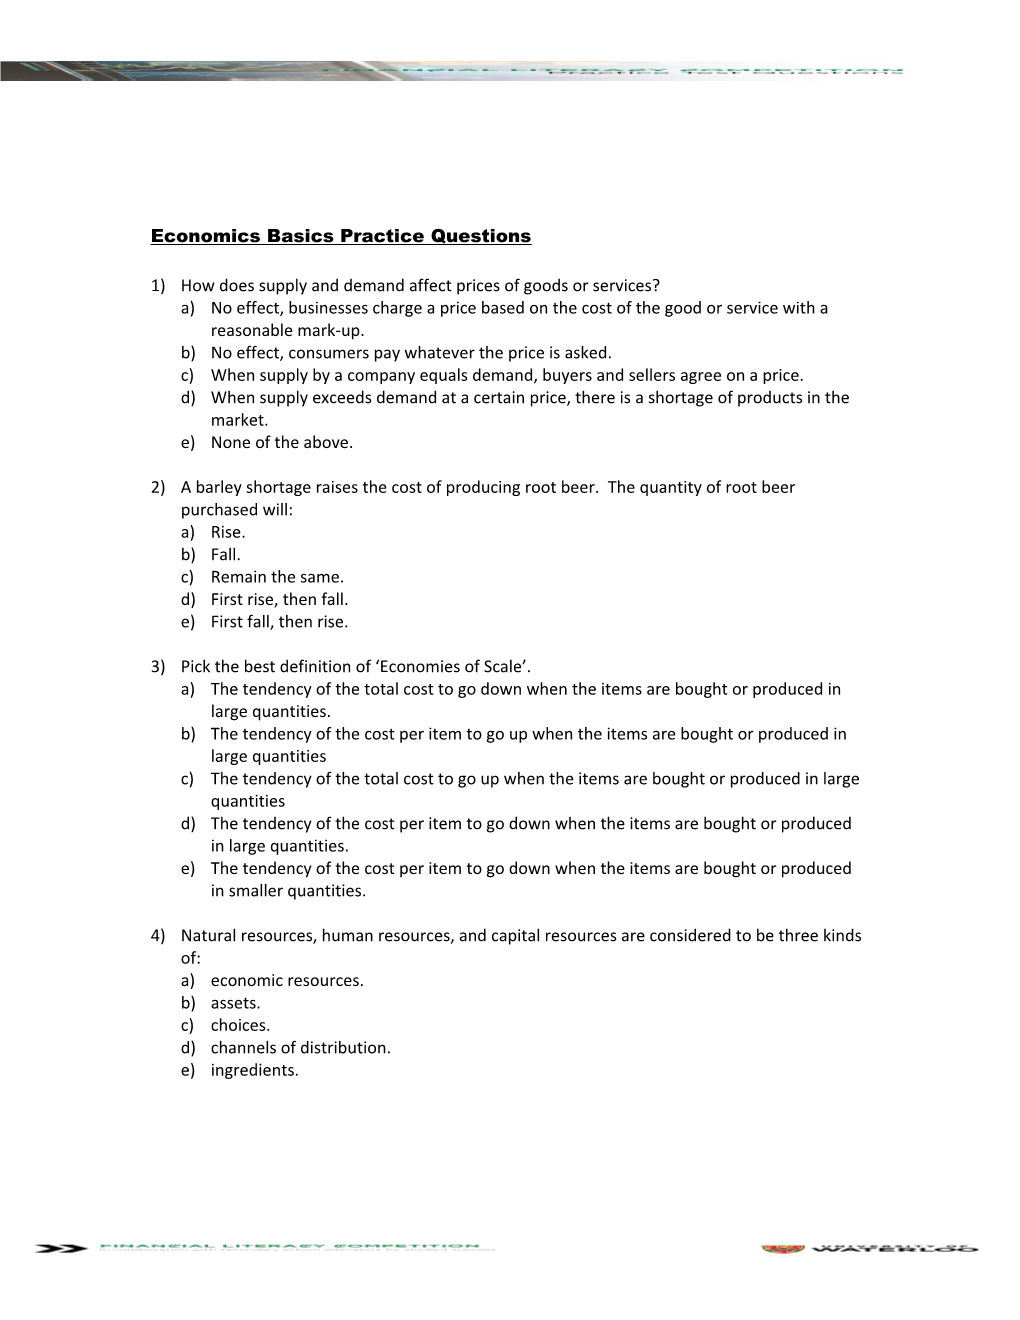 Economics Basics Practice Questions